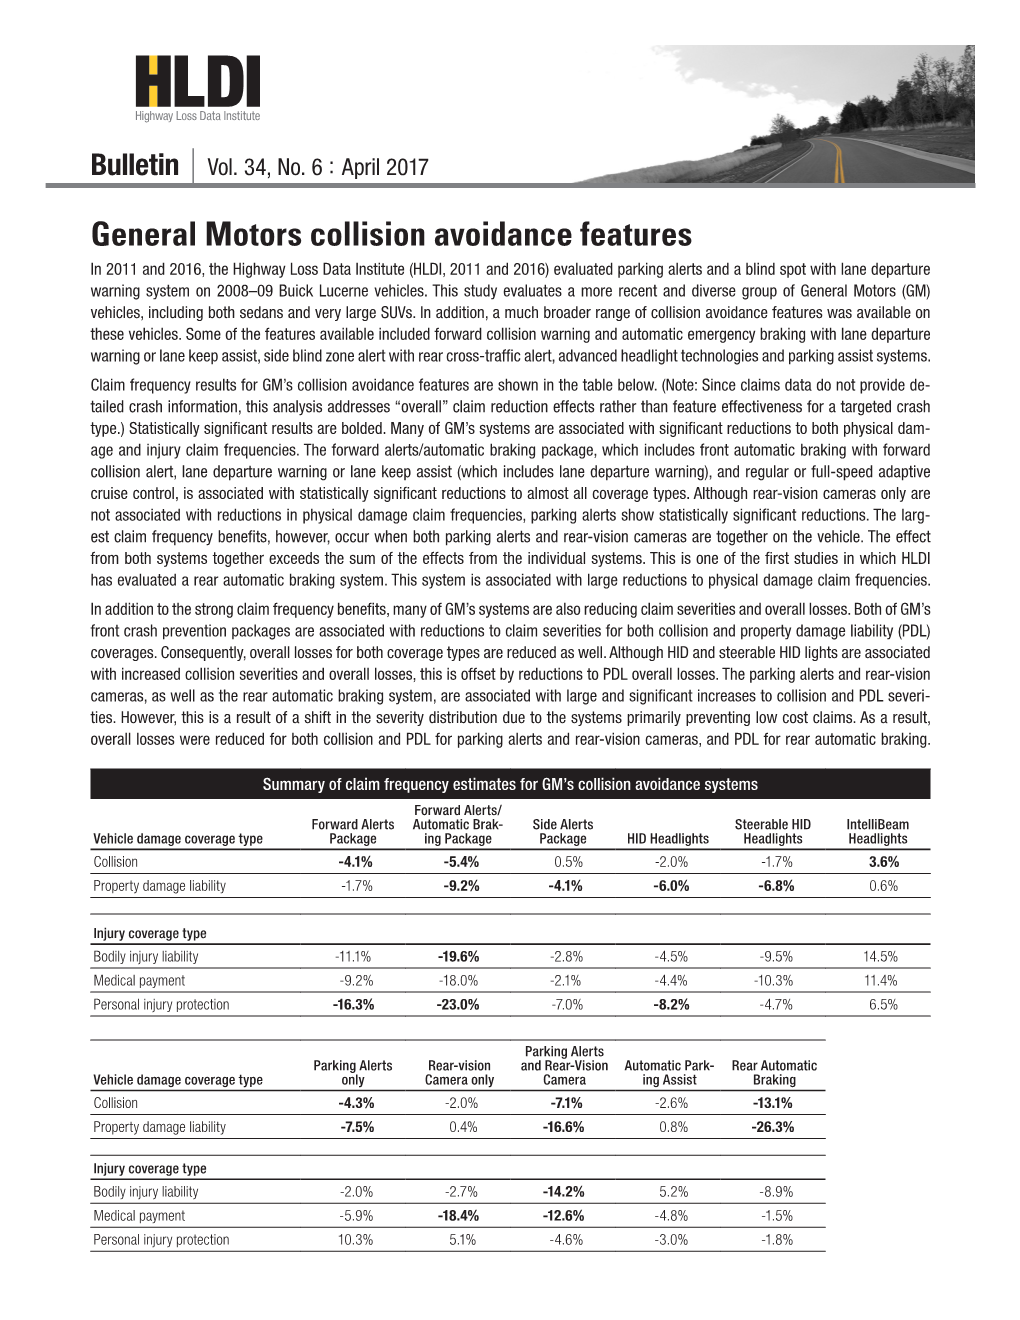 General Motors Collision Avoidance Features